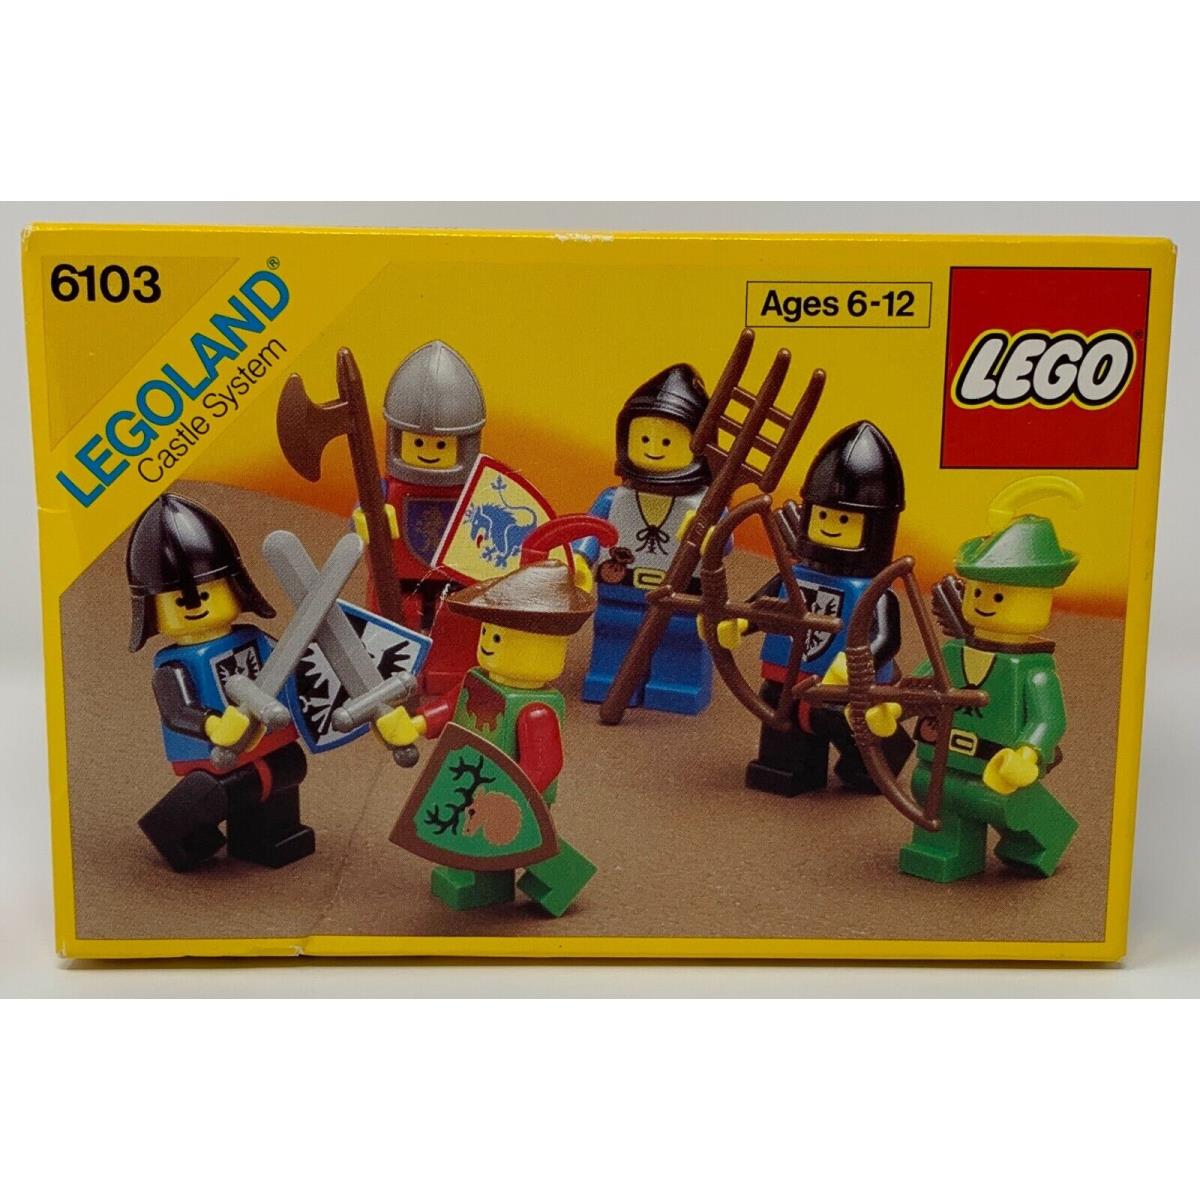 Lego 6103 Castle Mini Figures 1988